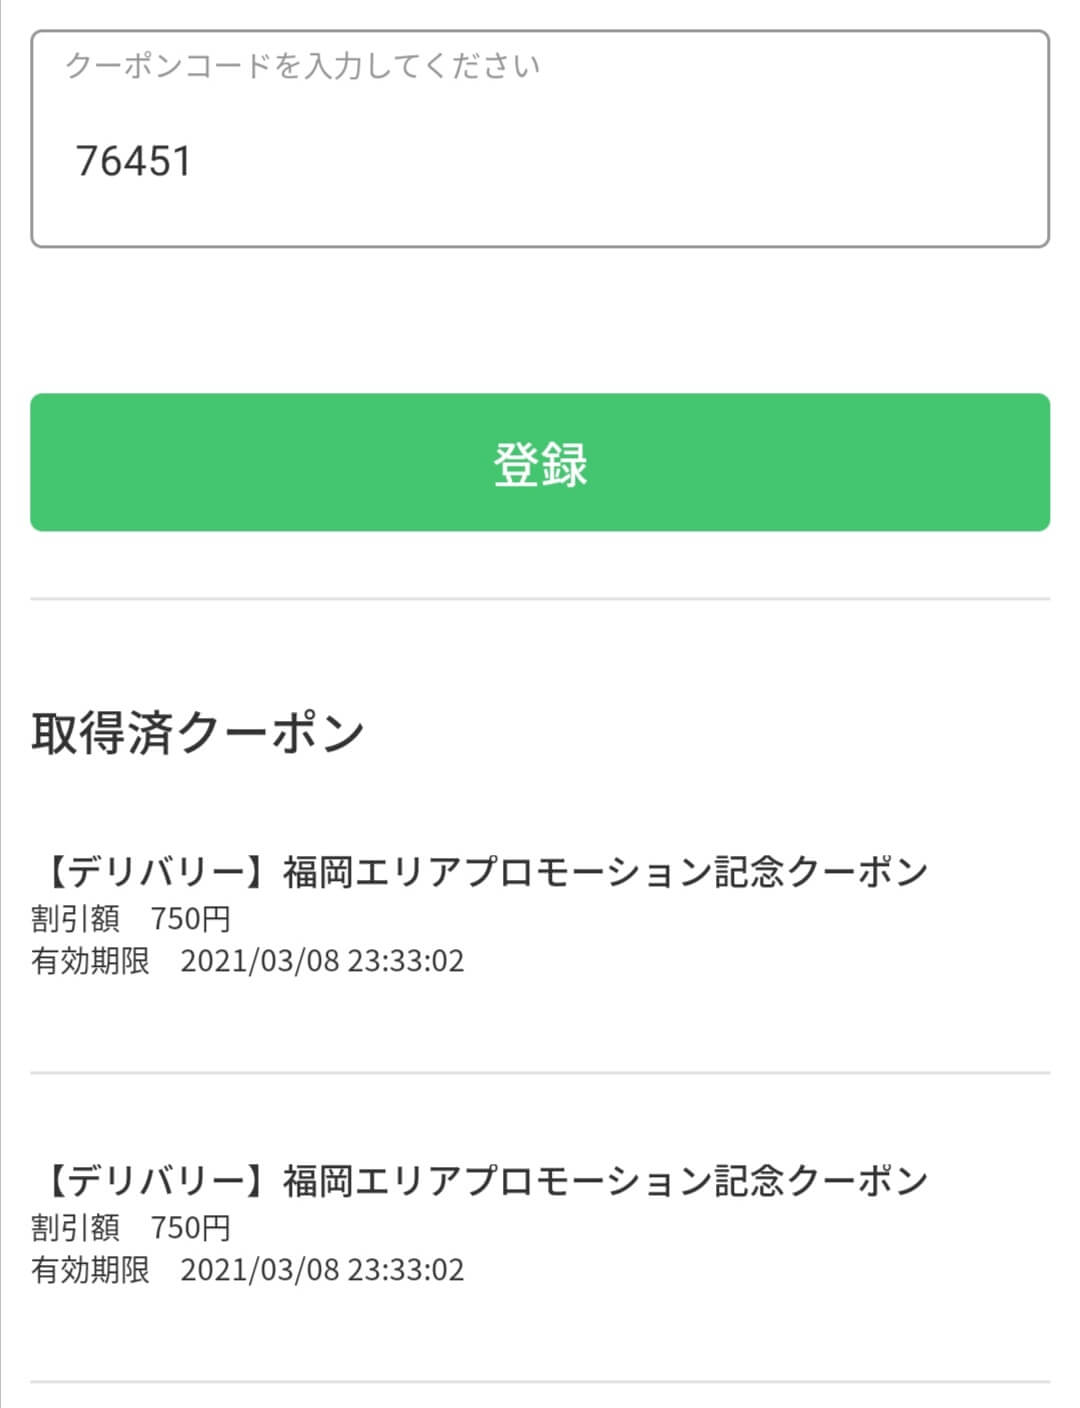 menuクーポンコード初回1500円福岡限定